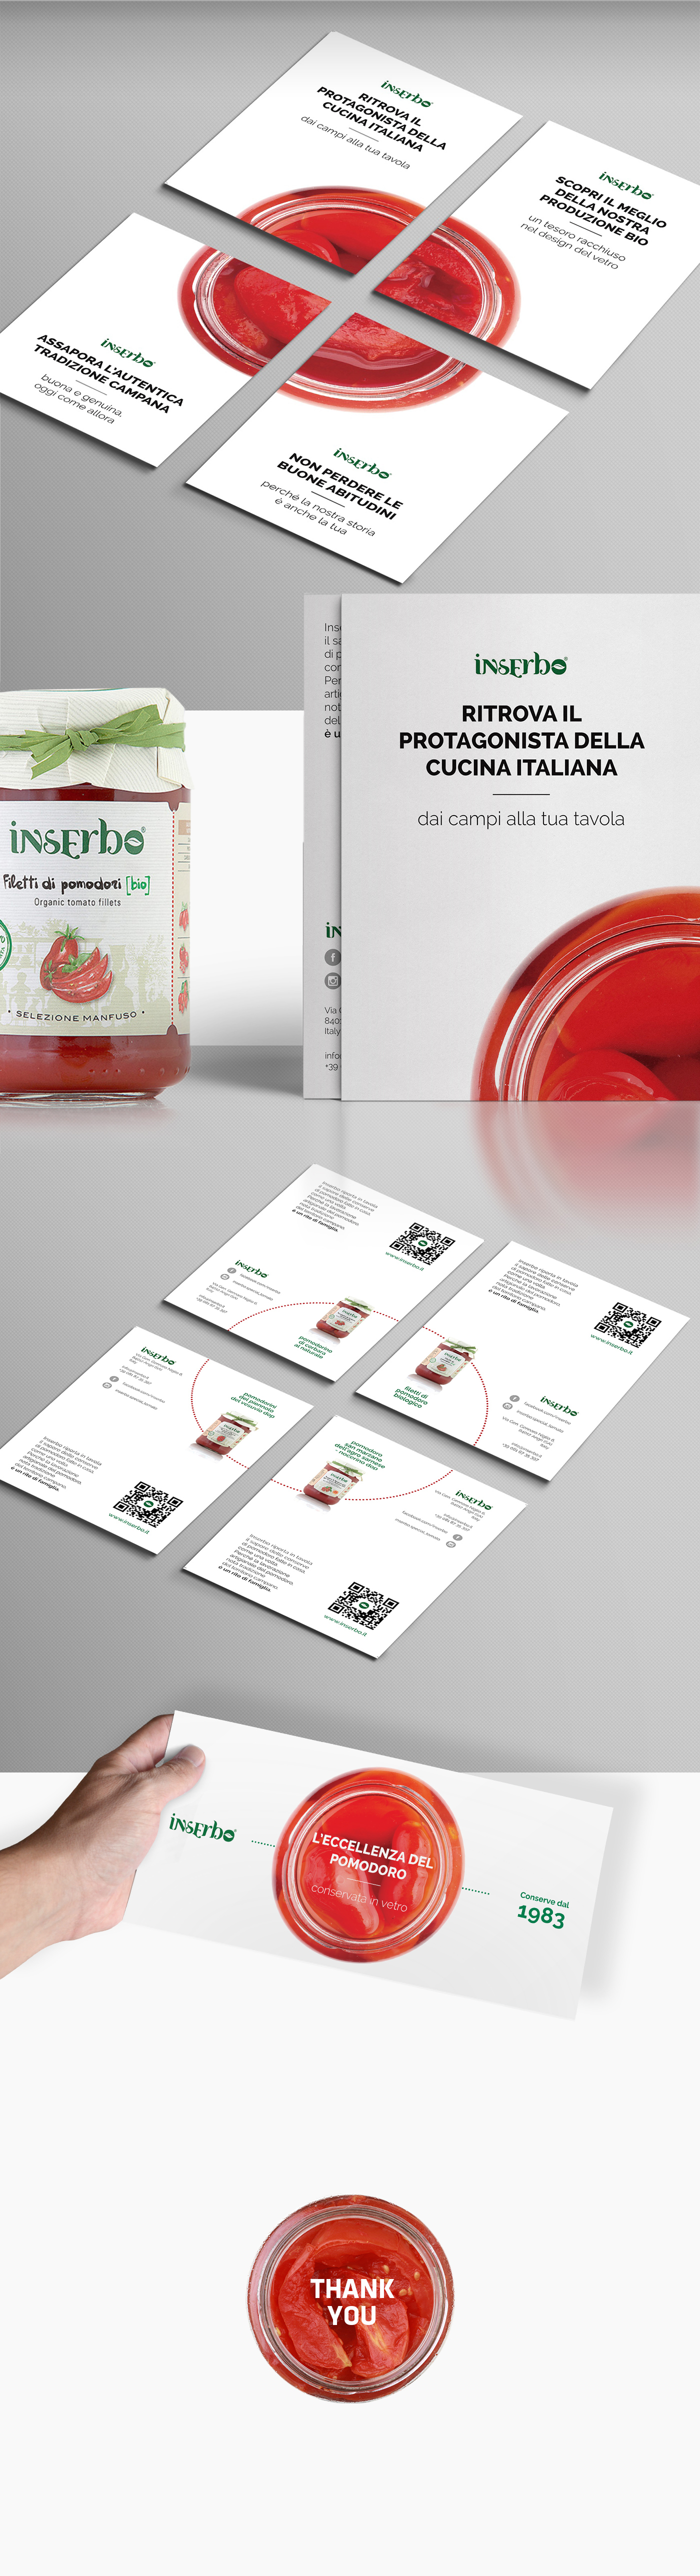 inserbo Conserve bio Biologic natural Tomatoe sauce red Web flyer card Vase Responsive Layout Preserve